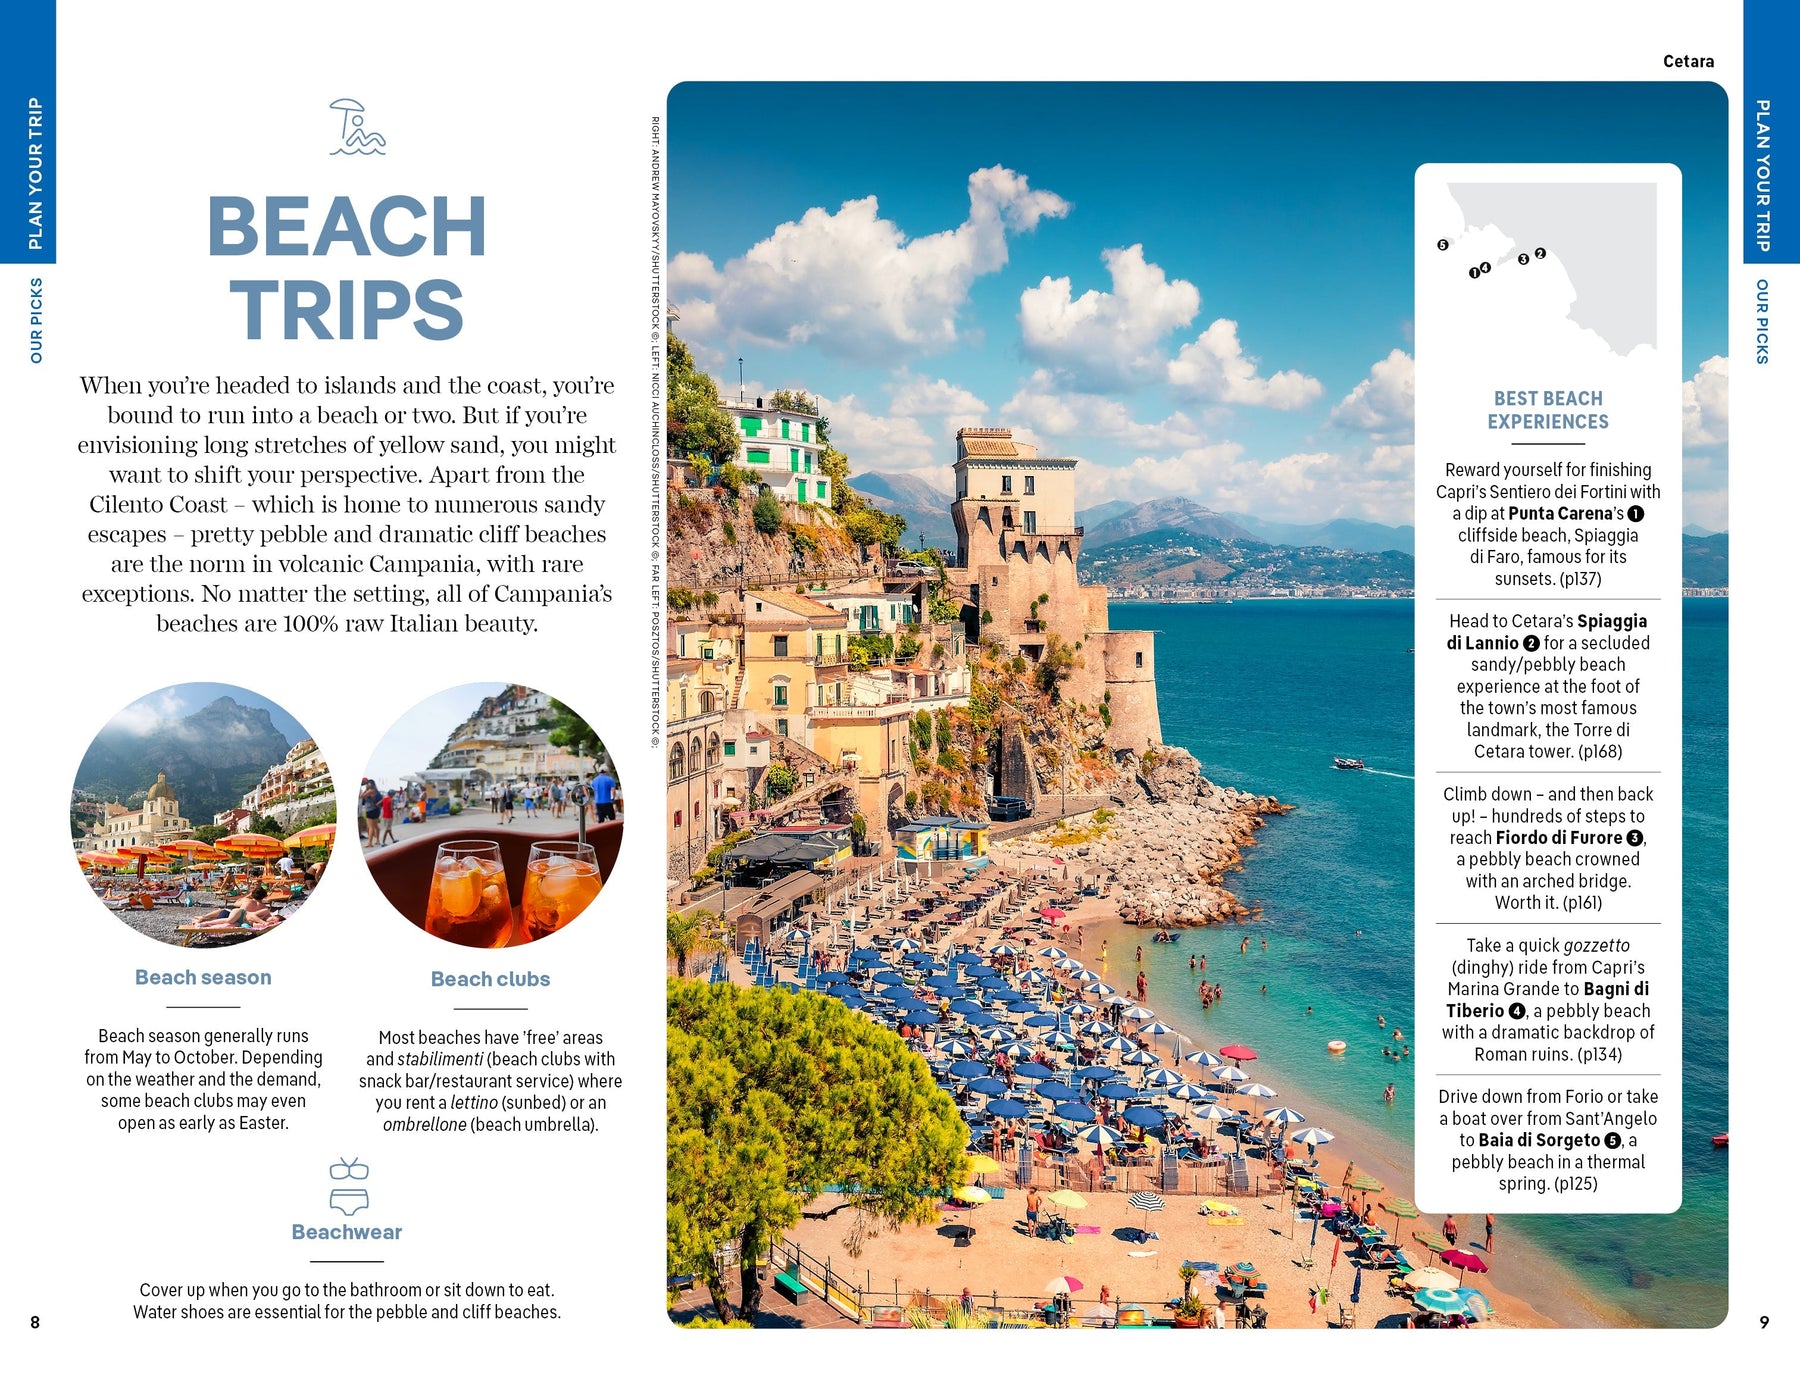 Naples, Pompeii & the Amalfi Coast - Book + eBook